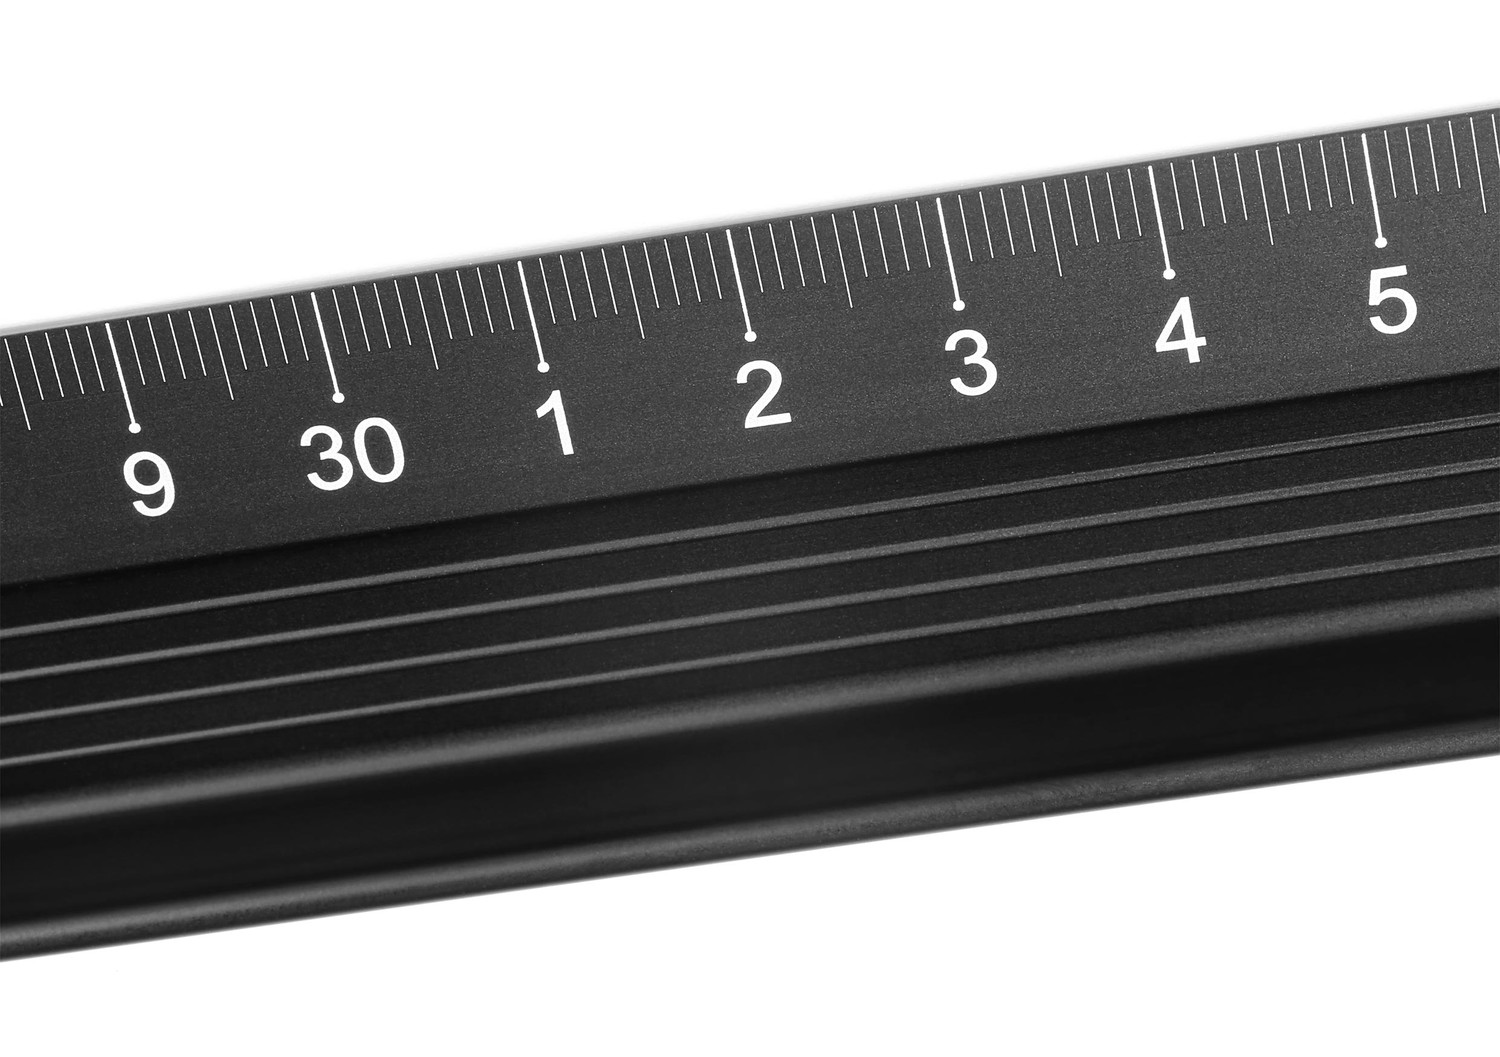 Handy centimetre markings for maximum precision cutting